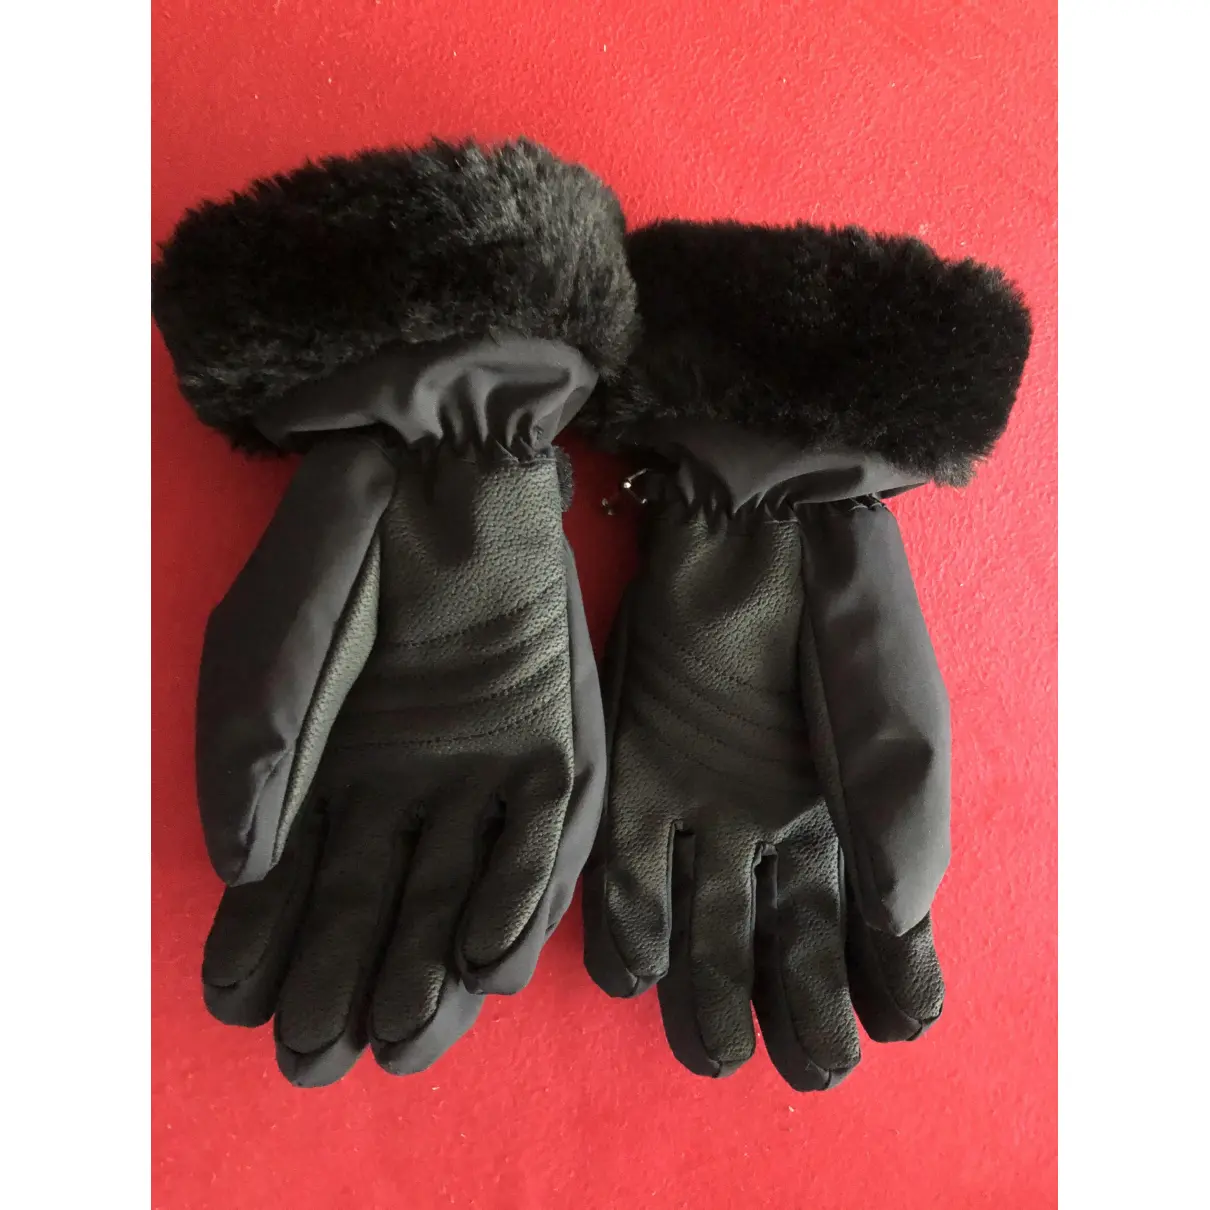 Buy Colmar Gloves online